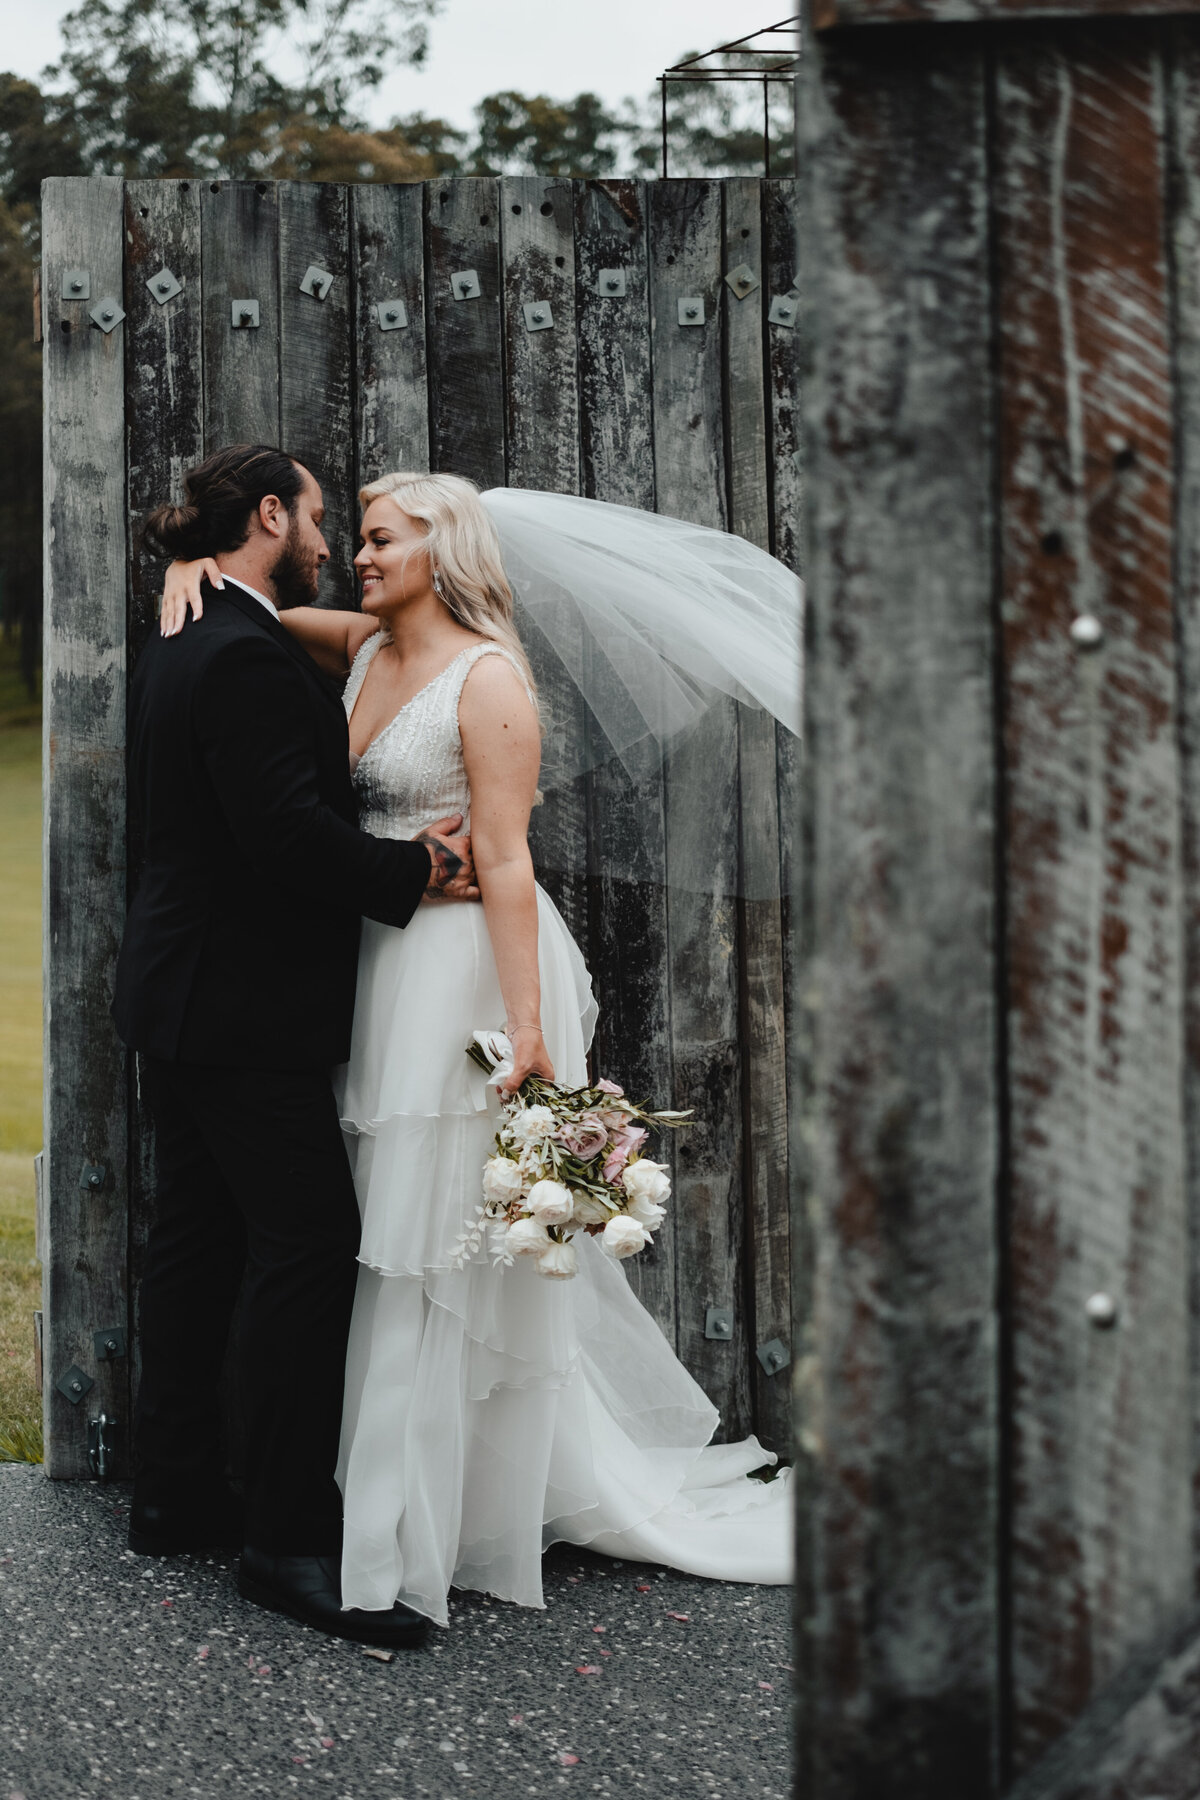 Abigail_Steven_Wedding_Images_Roam Ahead Weddings - 682